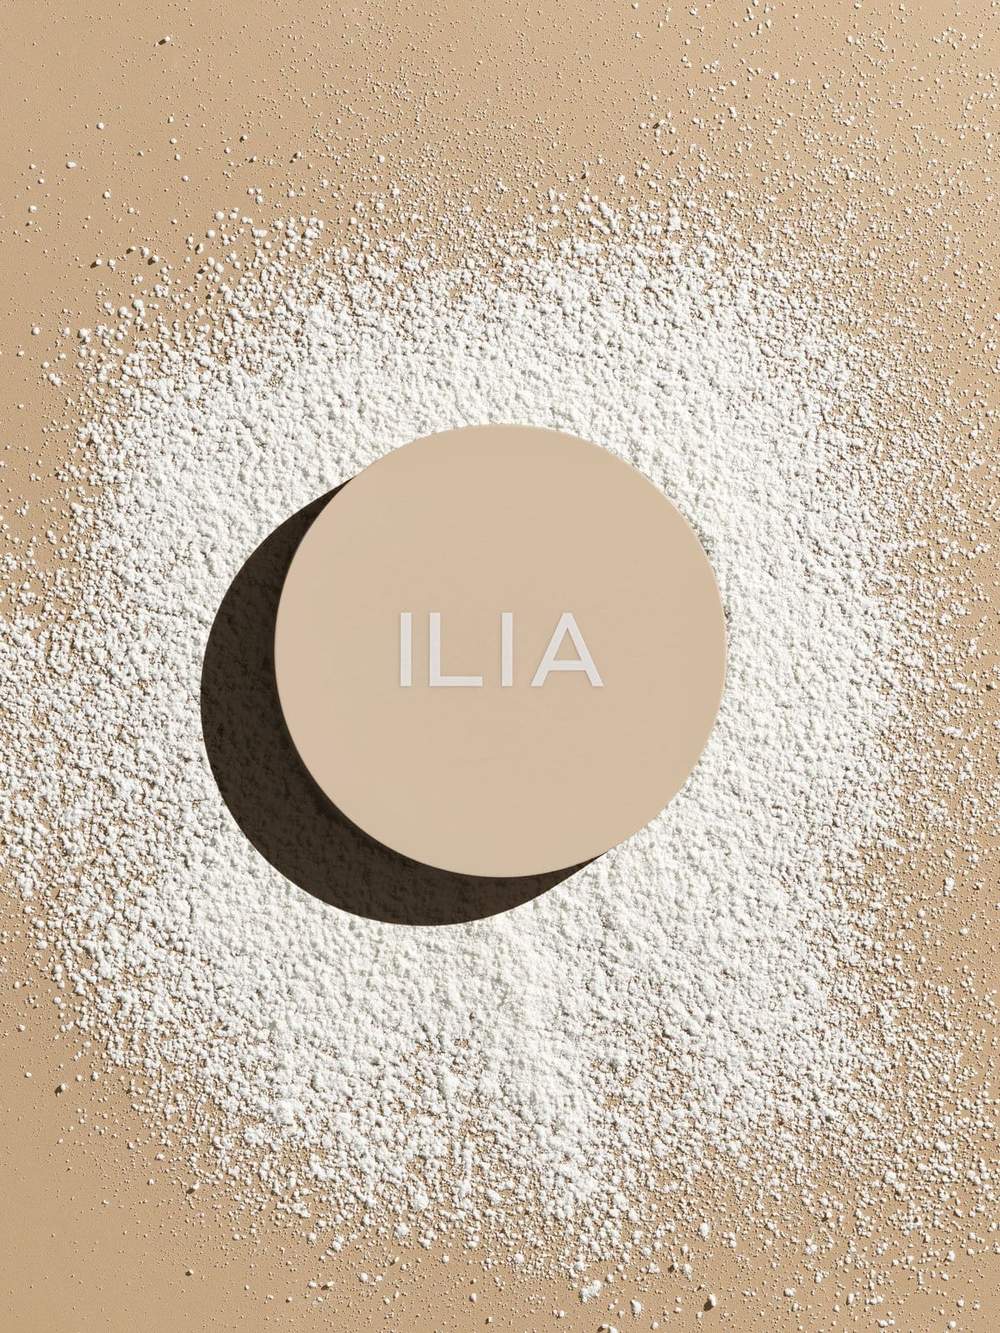 ILIA Soft Focus Finishing Translucent Powder